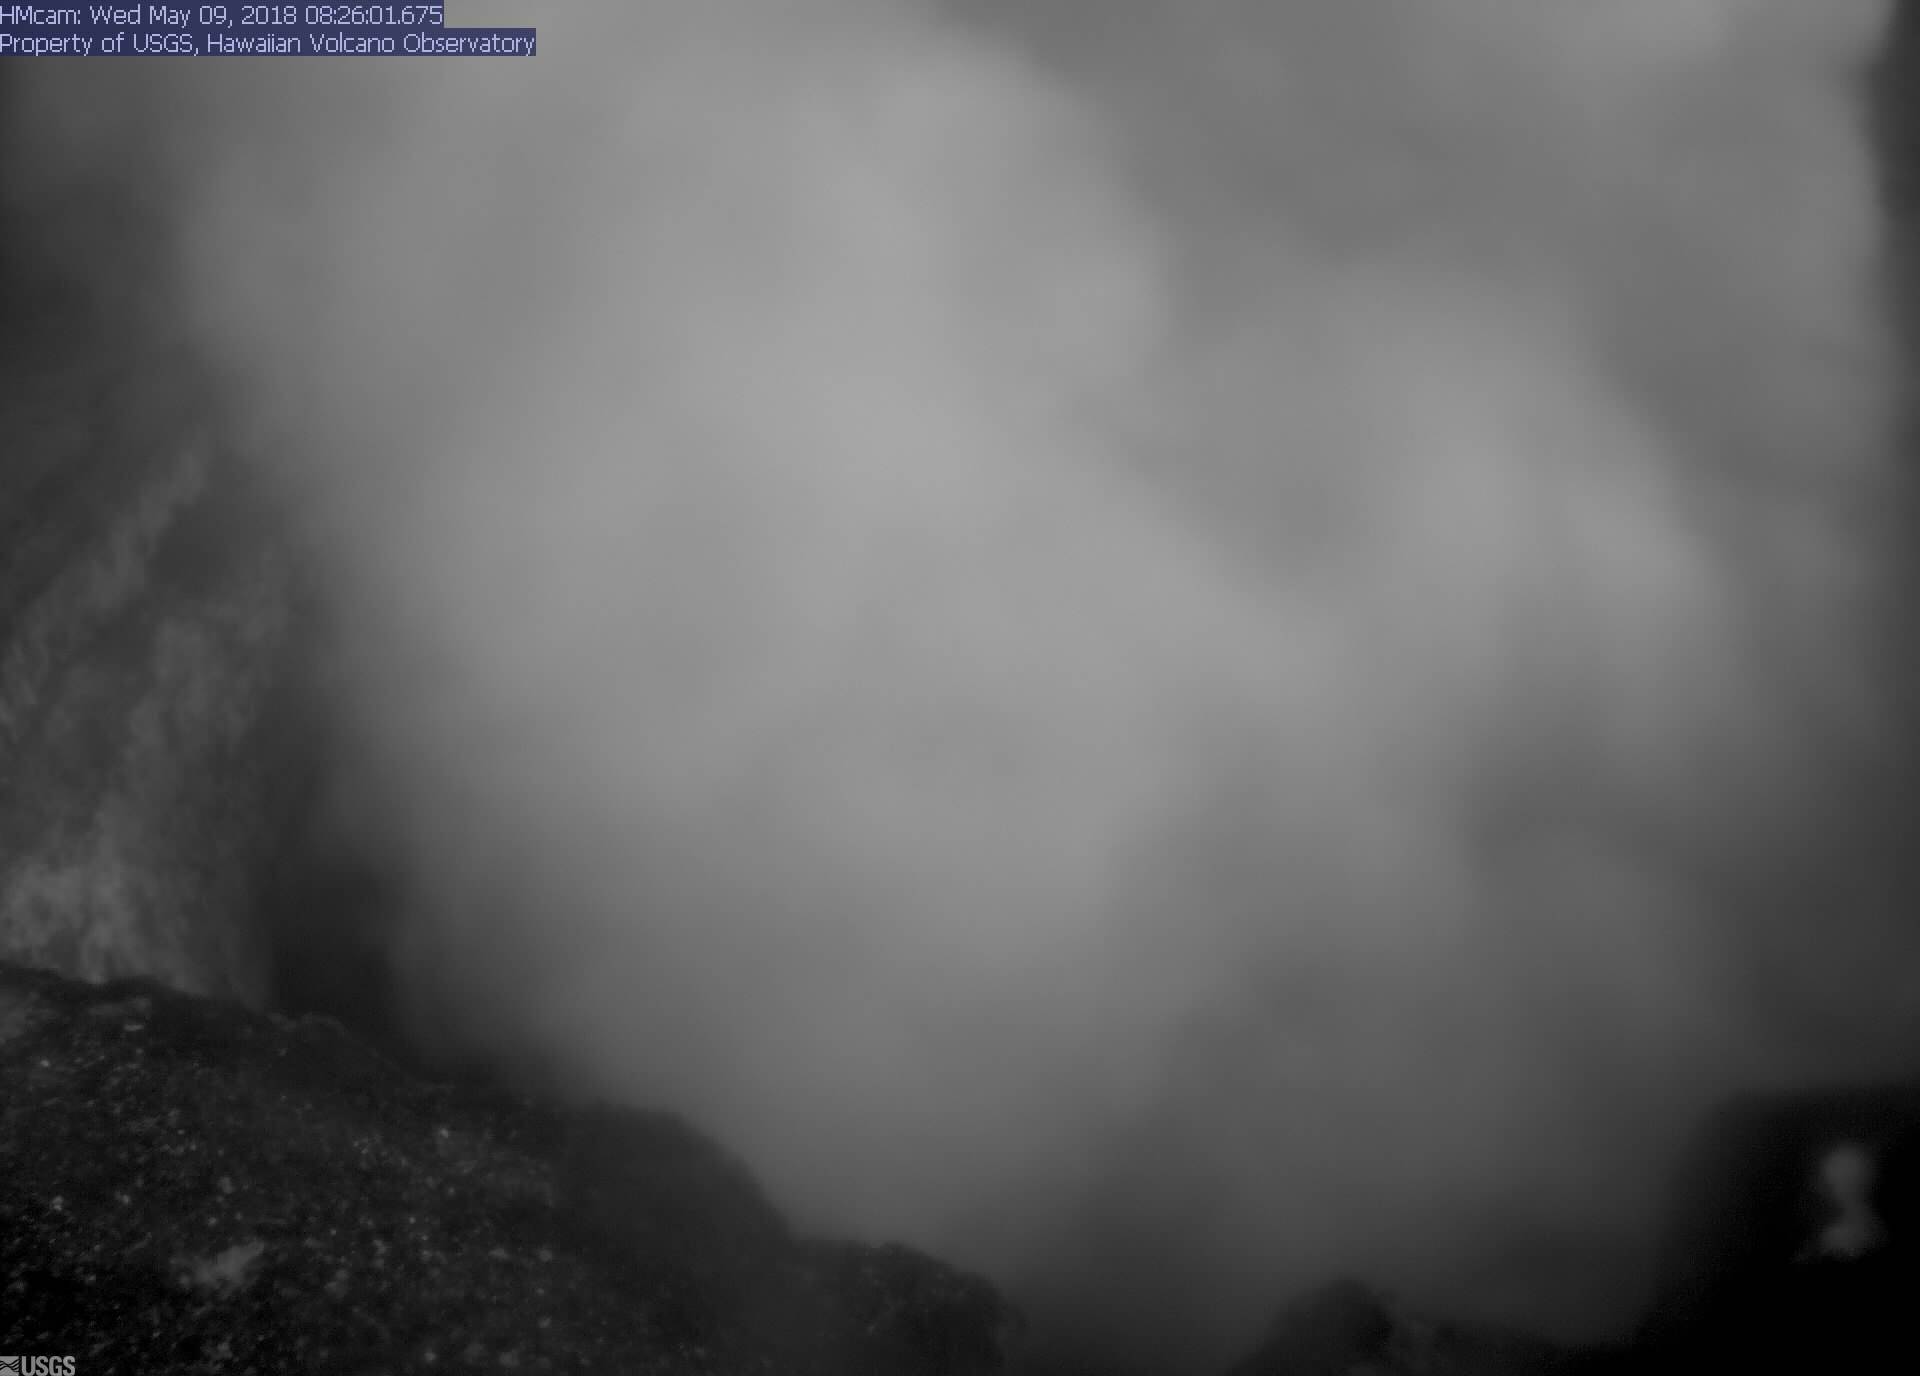 Live image of Kīlauea Volcano